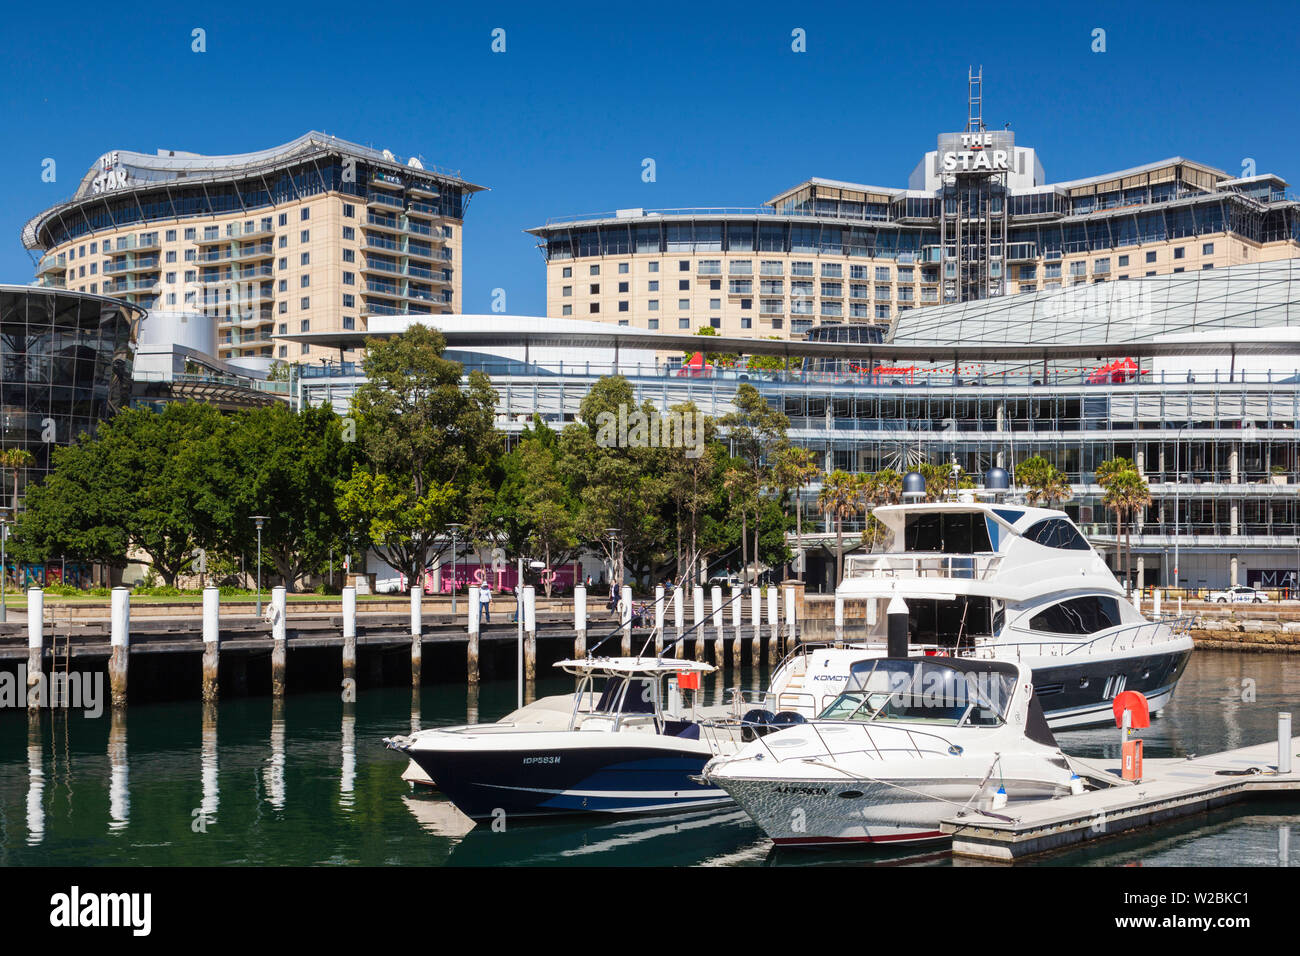 Australien, New South Wales, New South Wales, Sydney, The Star Casino und Hotel, außen Stockfoto